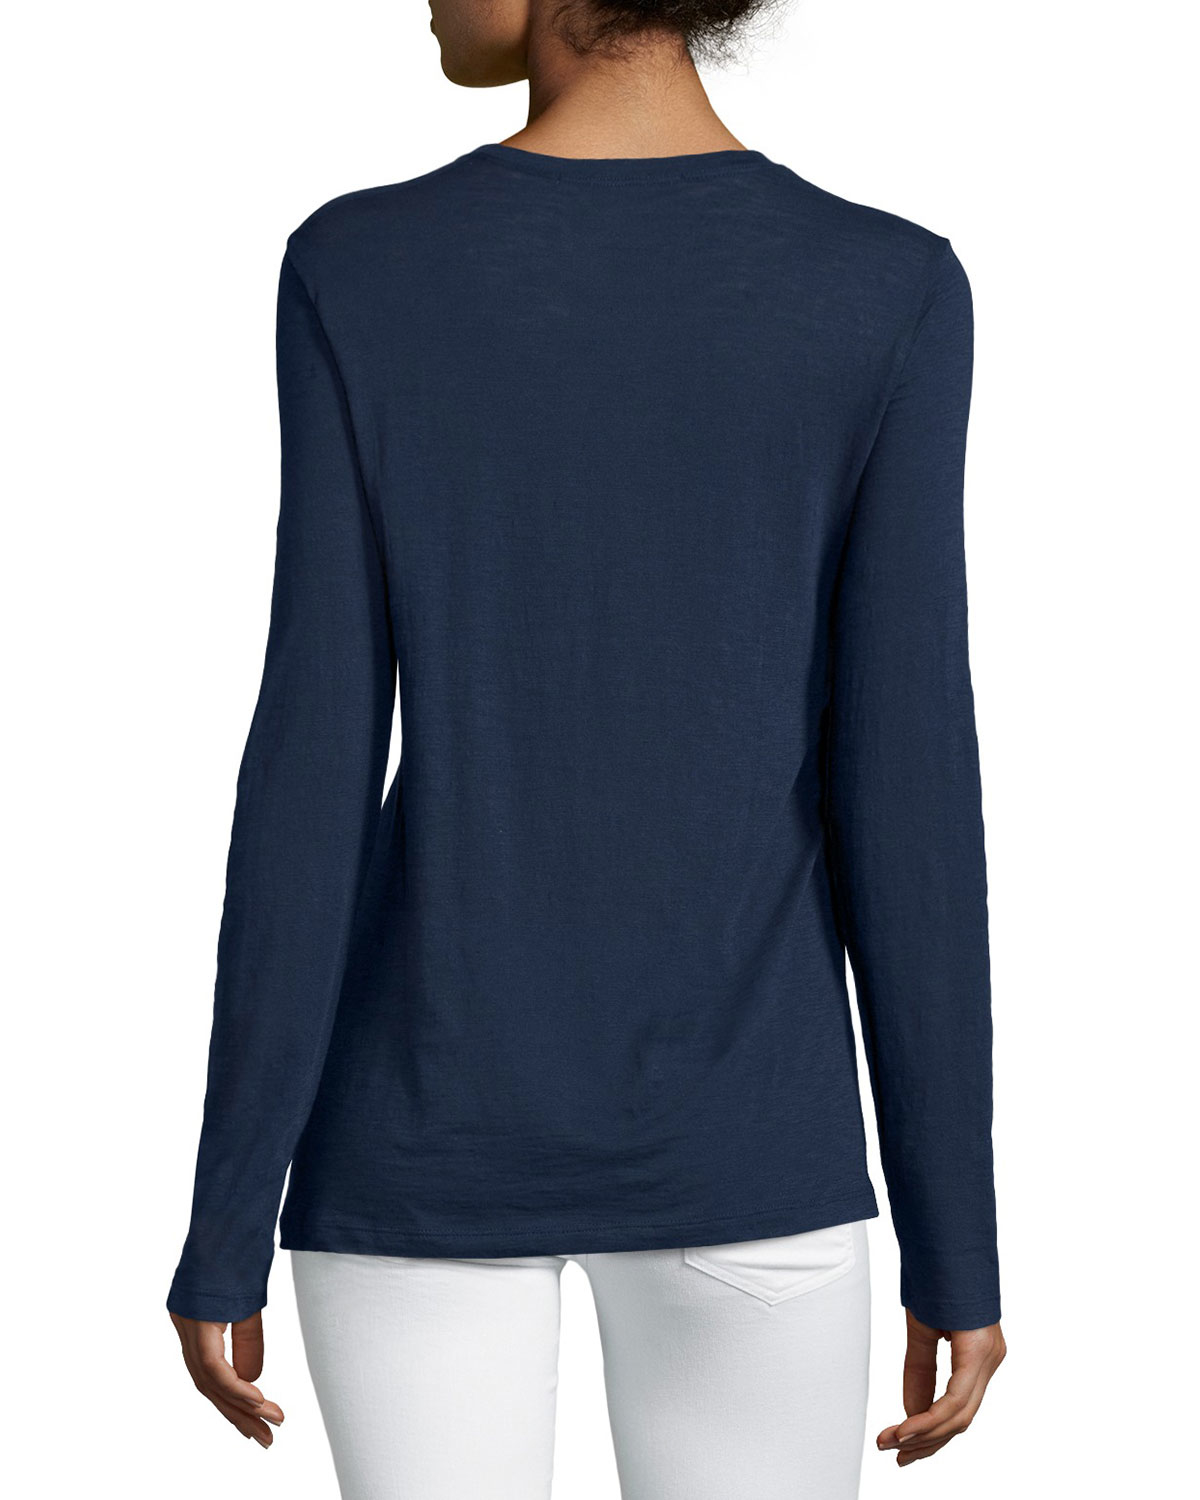 Lyst - Proenza schouler Long-sleeve Jewel-neck T-shirt in Blue